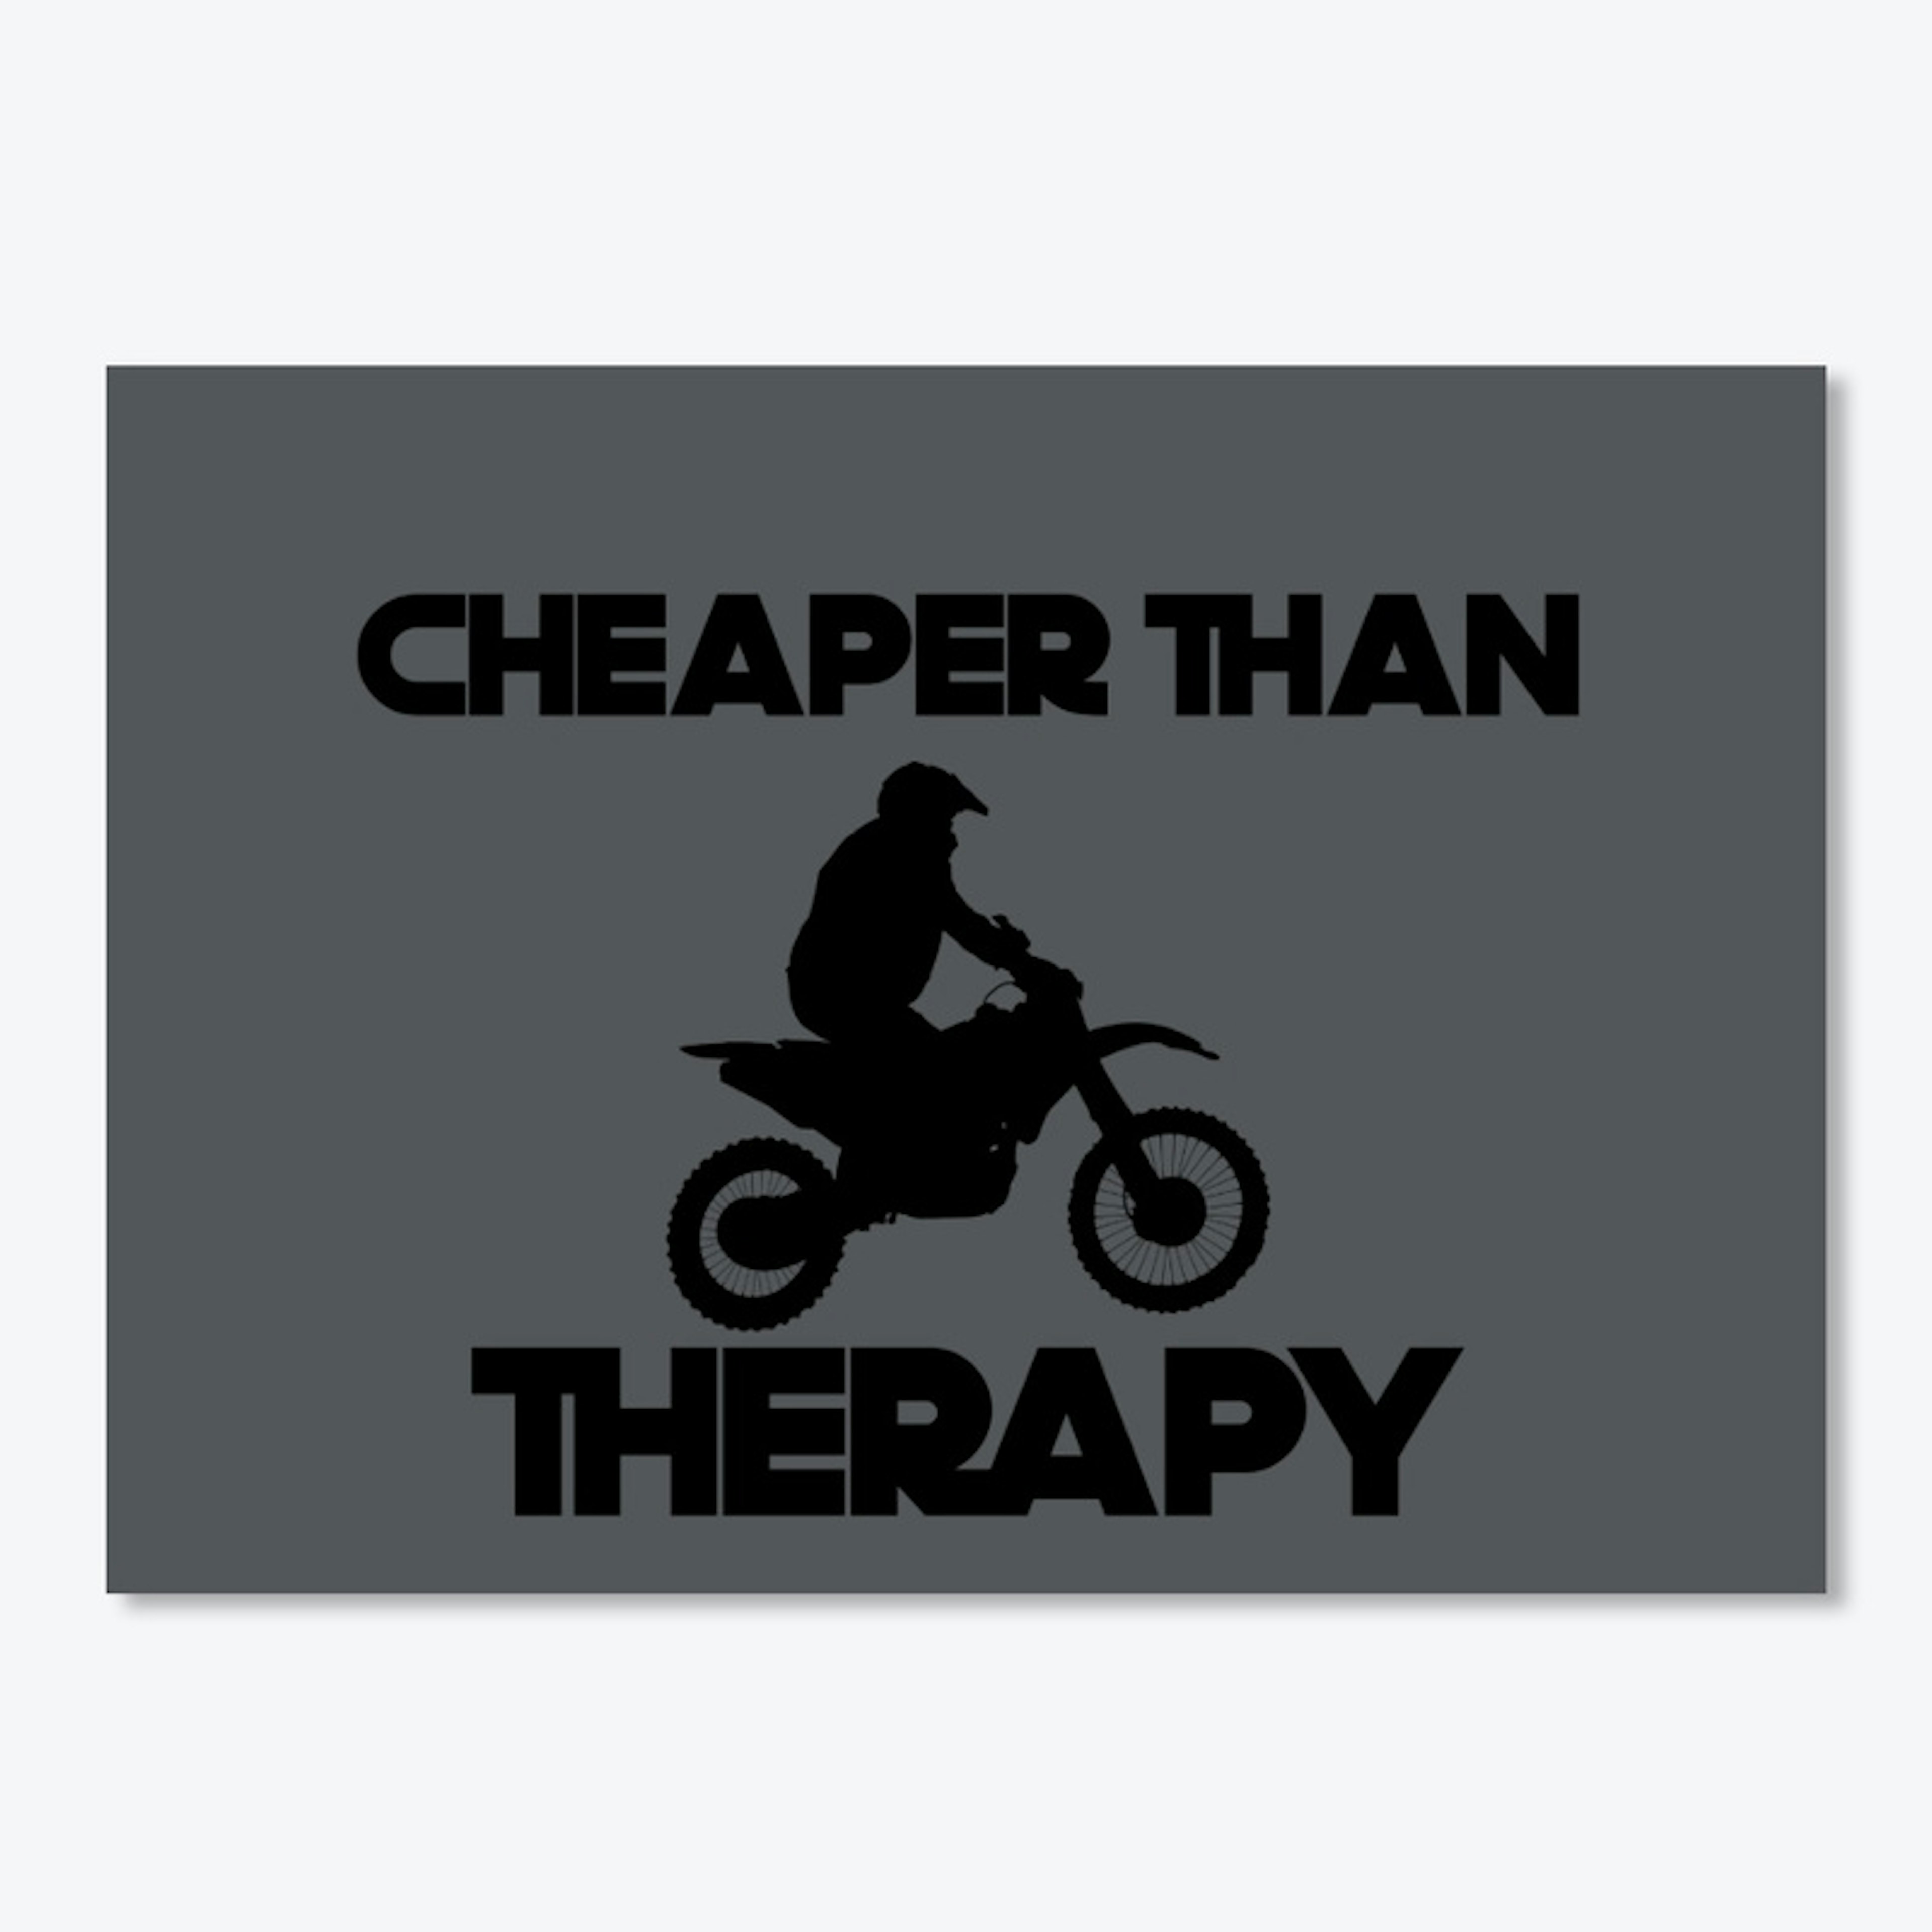 Dirt Biking is Cheaper Than Therapy